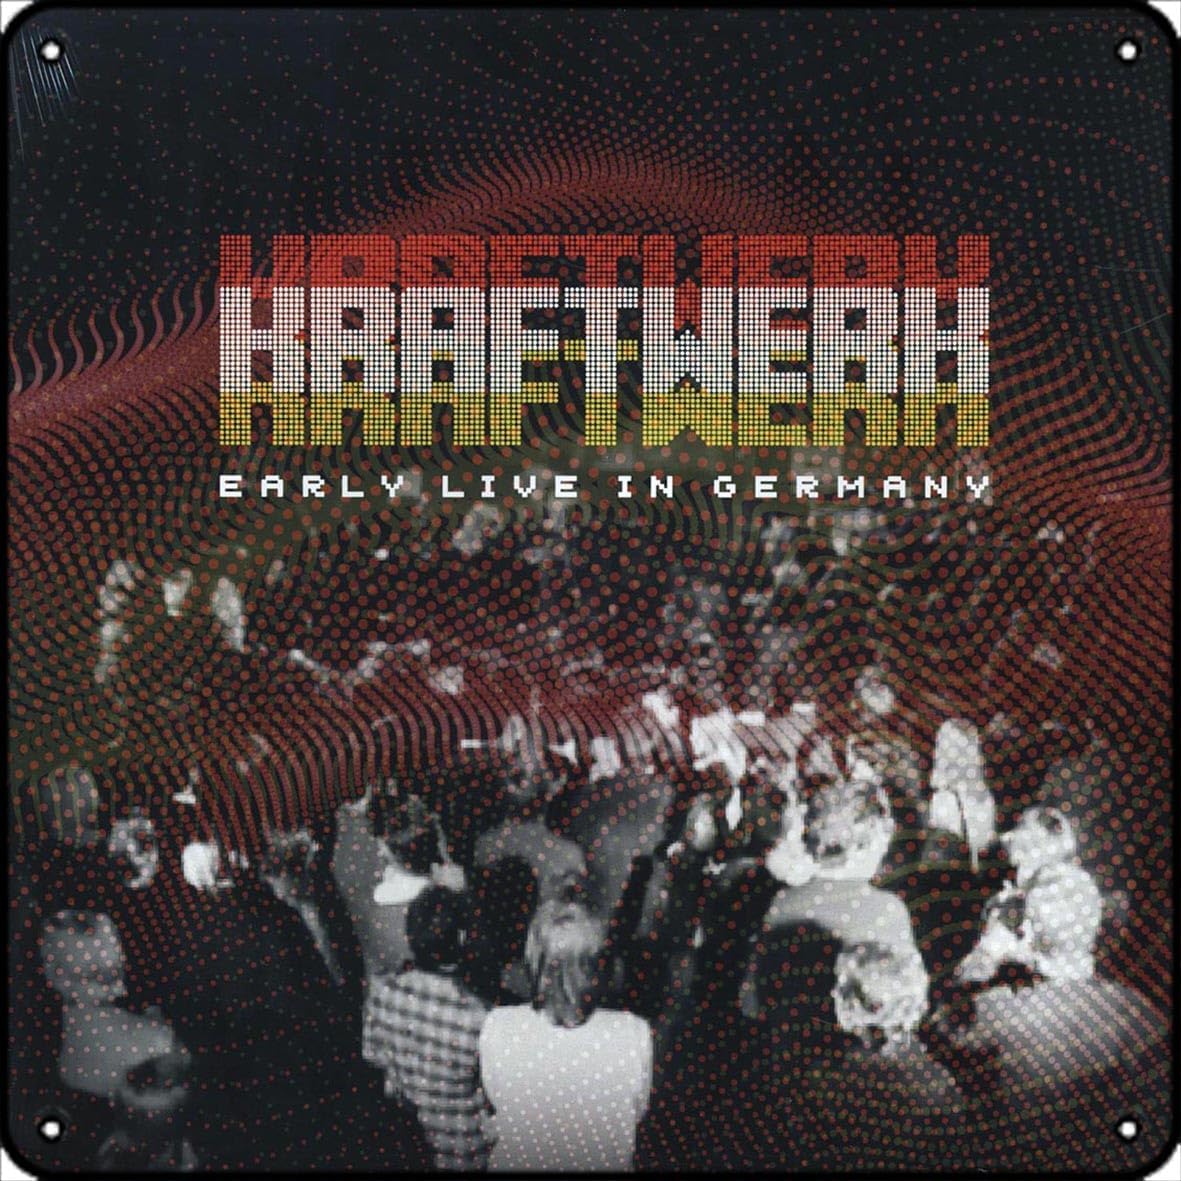 Kraftwerk - Early Live In Germany